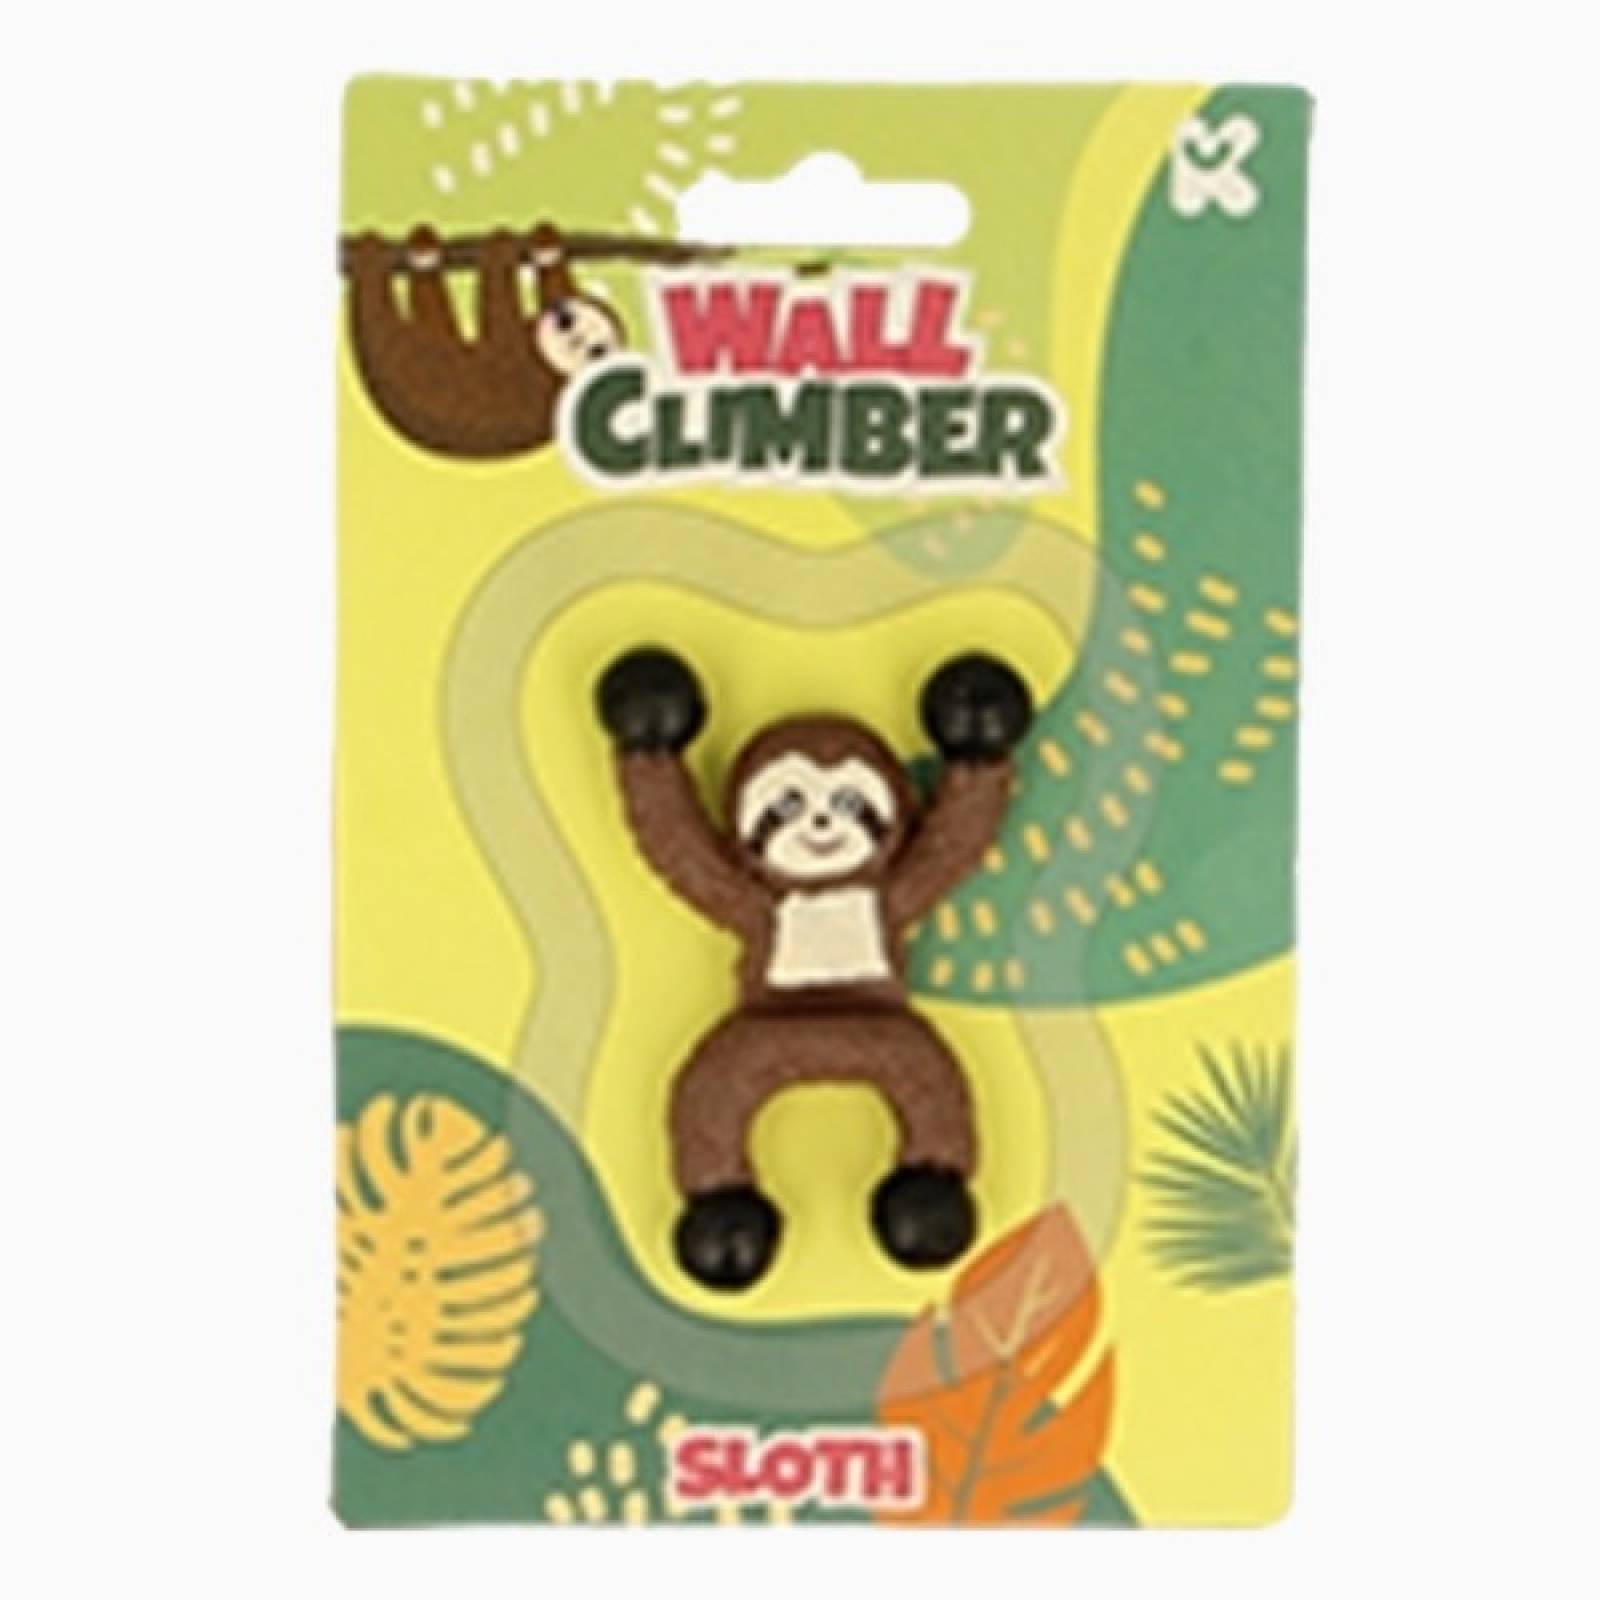 Sloth Wall Climber Toy 3+